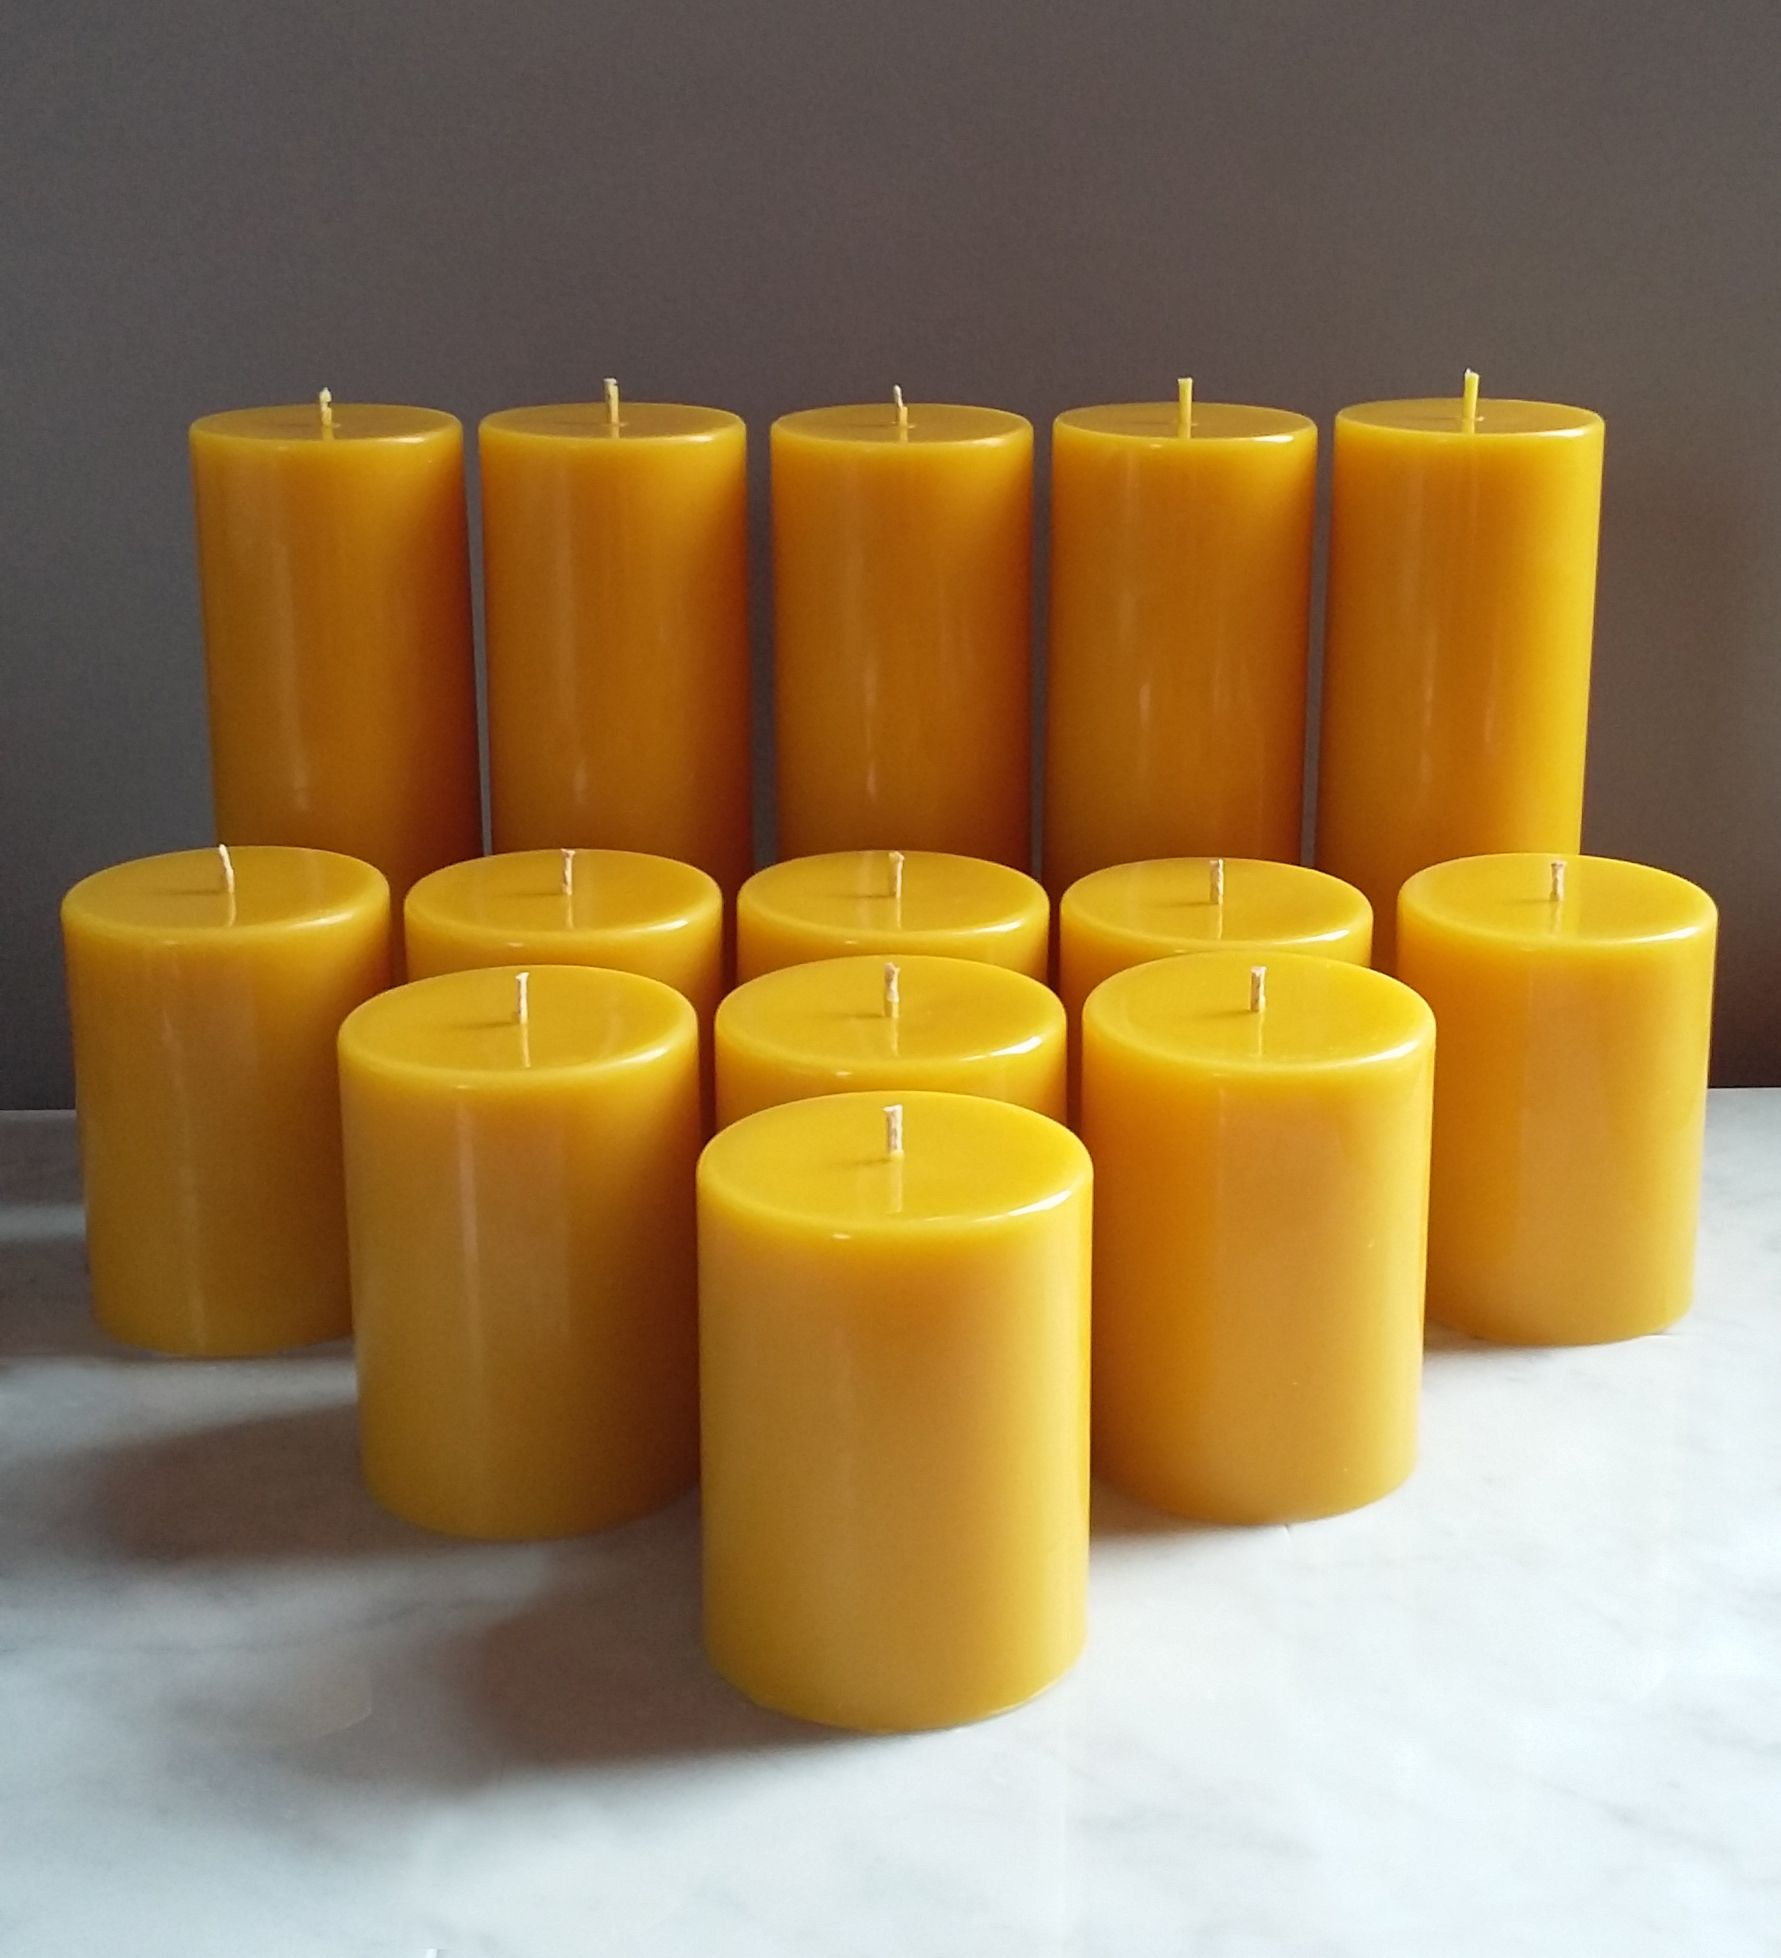 beeswax pillar candles